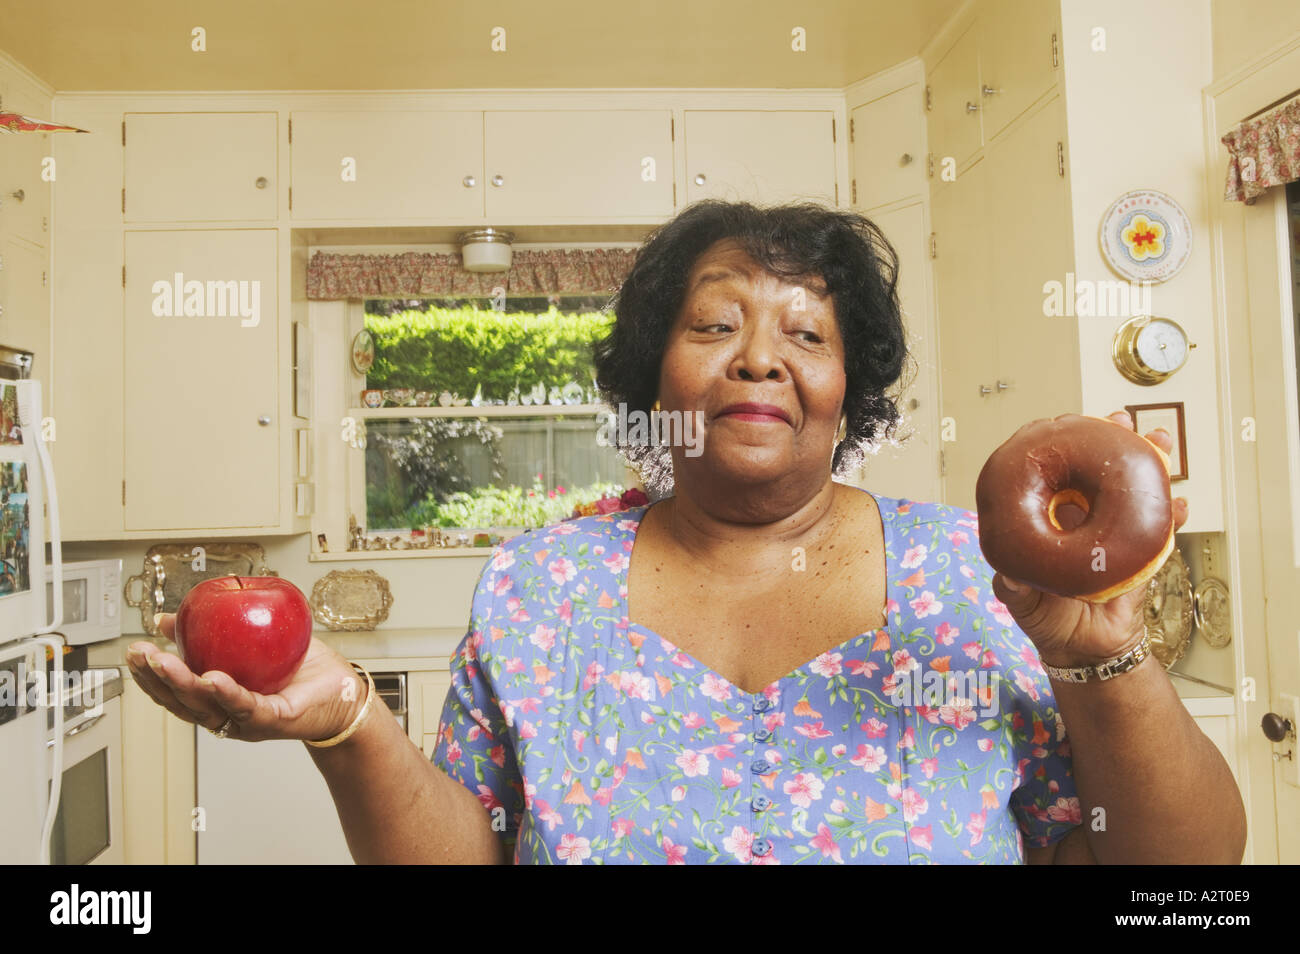 Woman deciding whether to eat an apple or doughnut Stock Photo